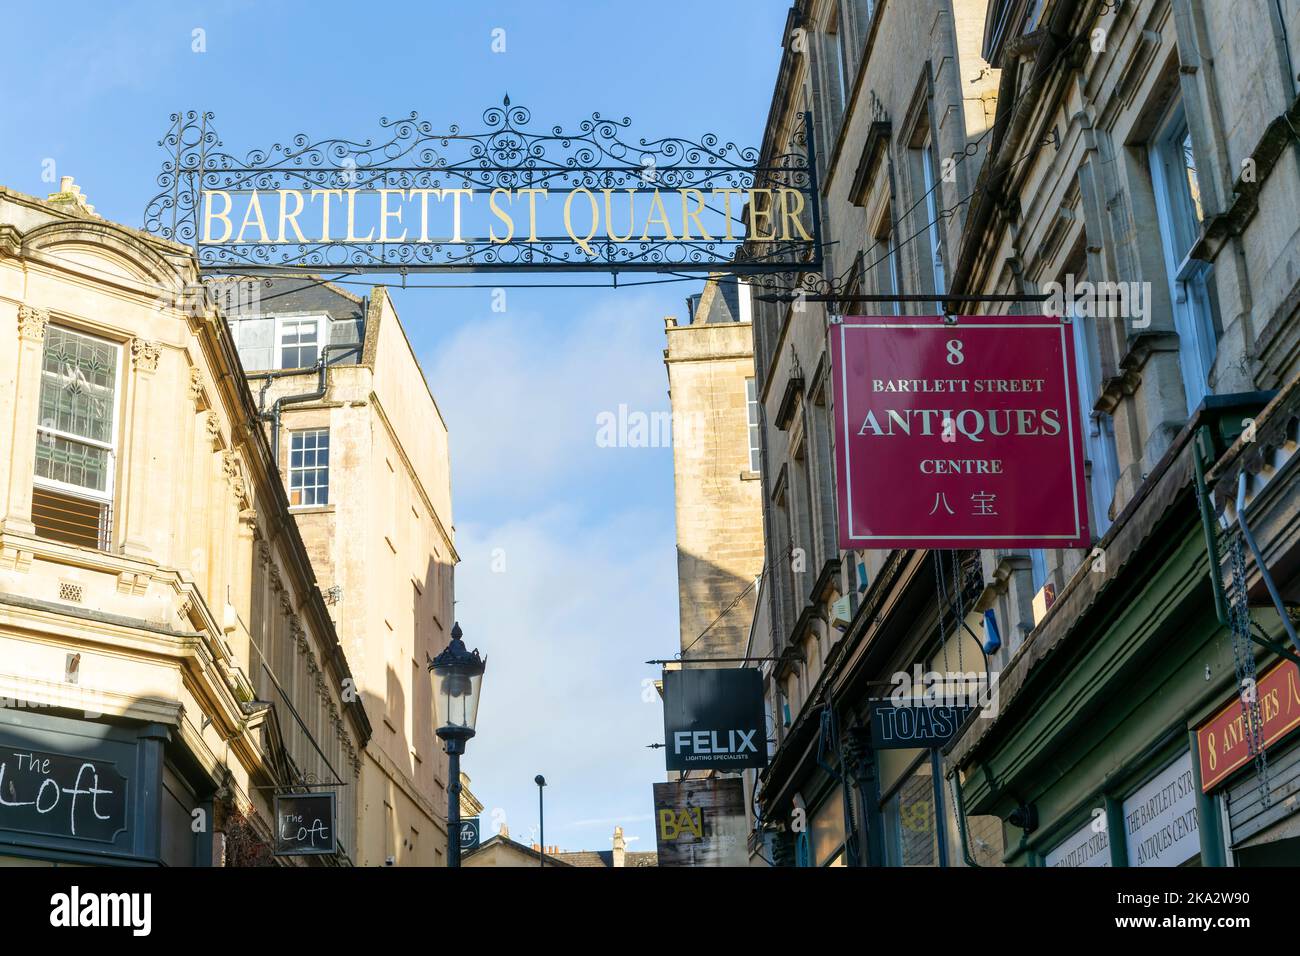 Sign for Bartlett Street Quarter of antique shops, Bath, Somerset, England, UK Stock Photo